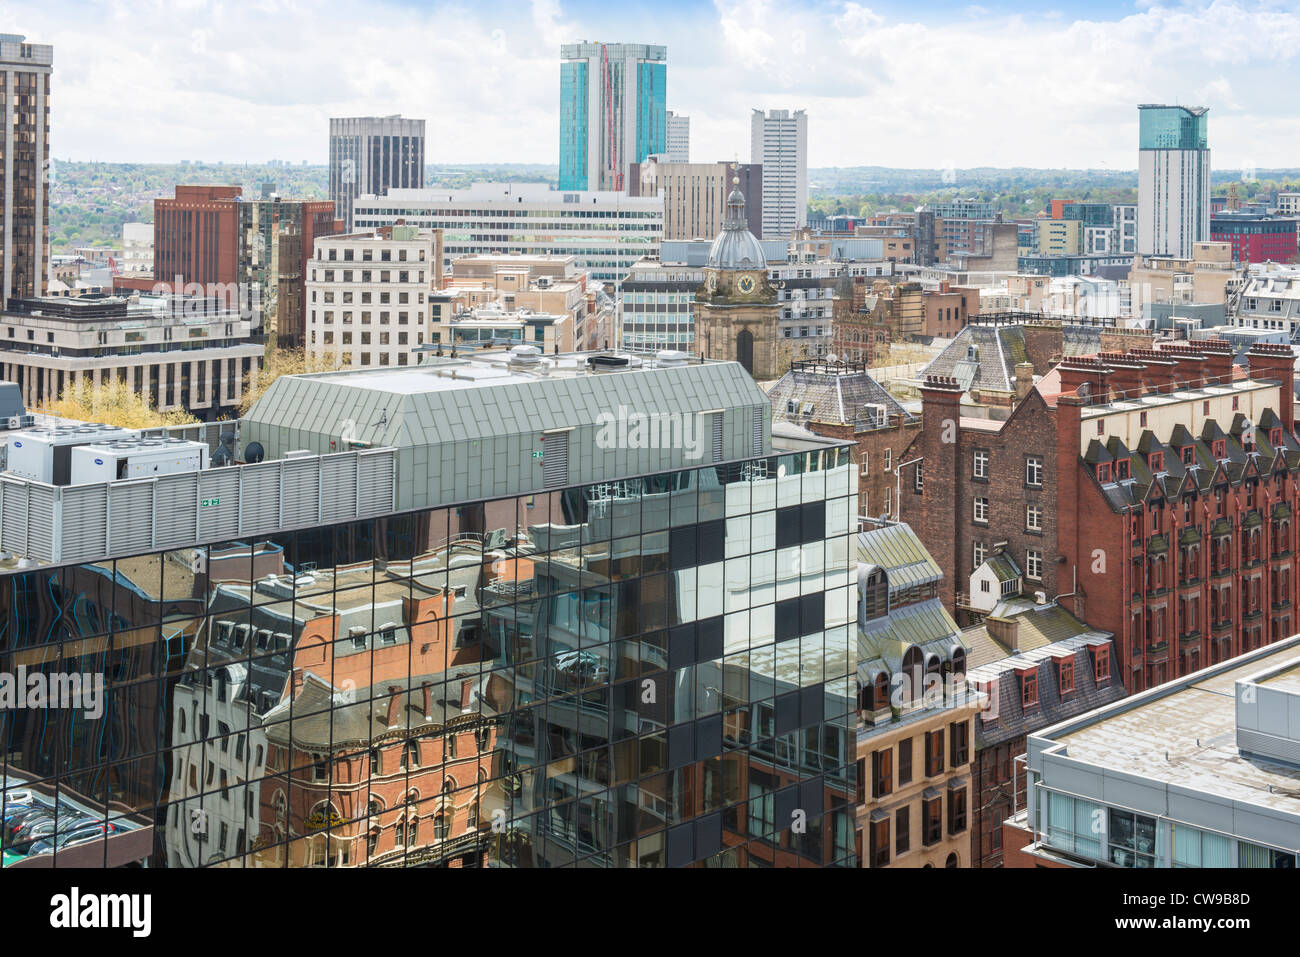 Foto aerea del centro cittadino di Birmingham skyline. West Midlands in Inghilterra. Foto Stock